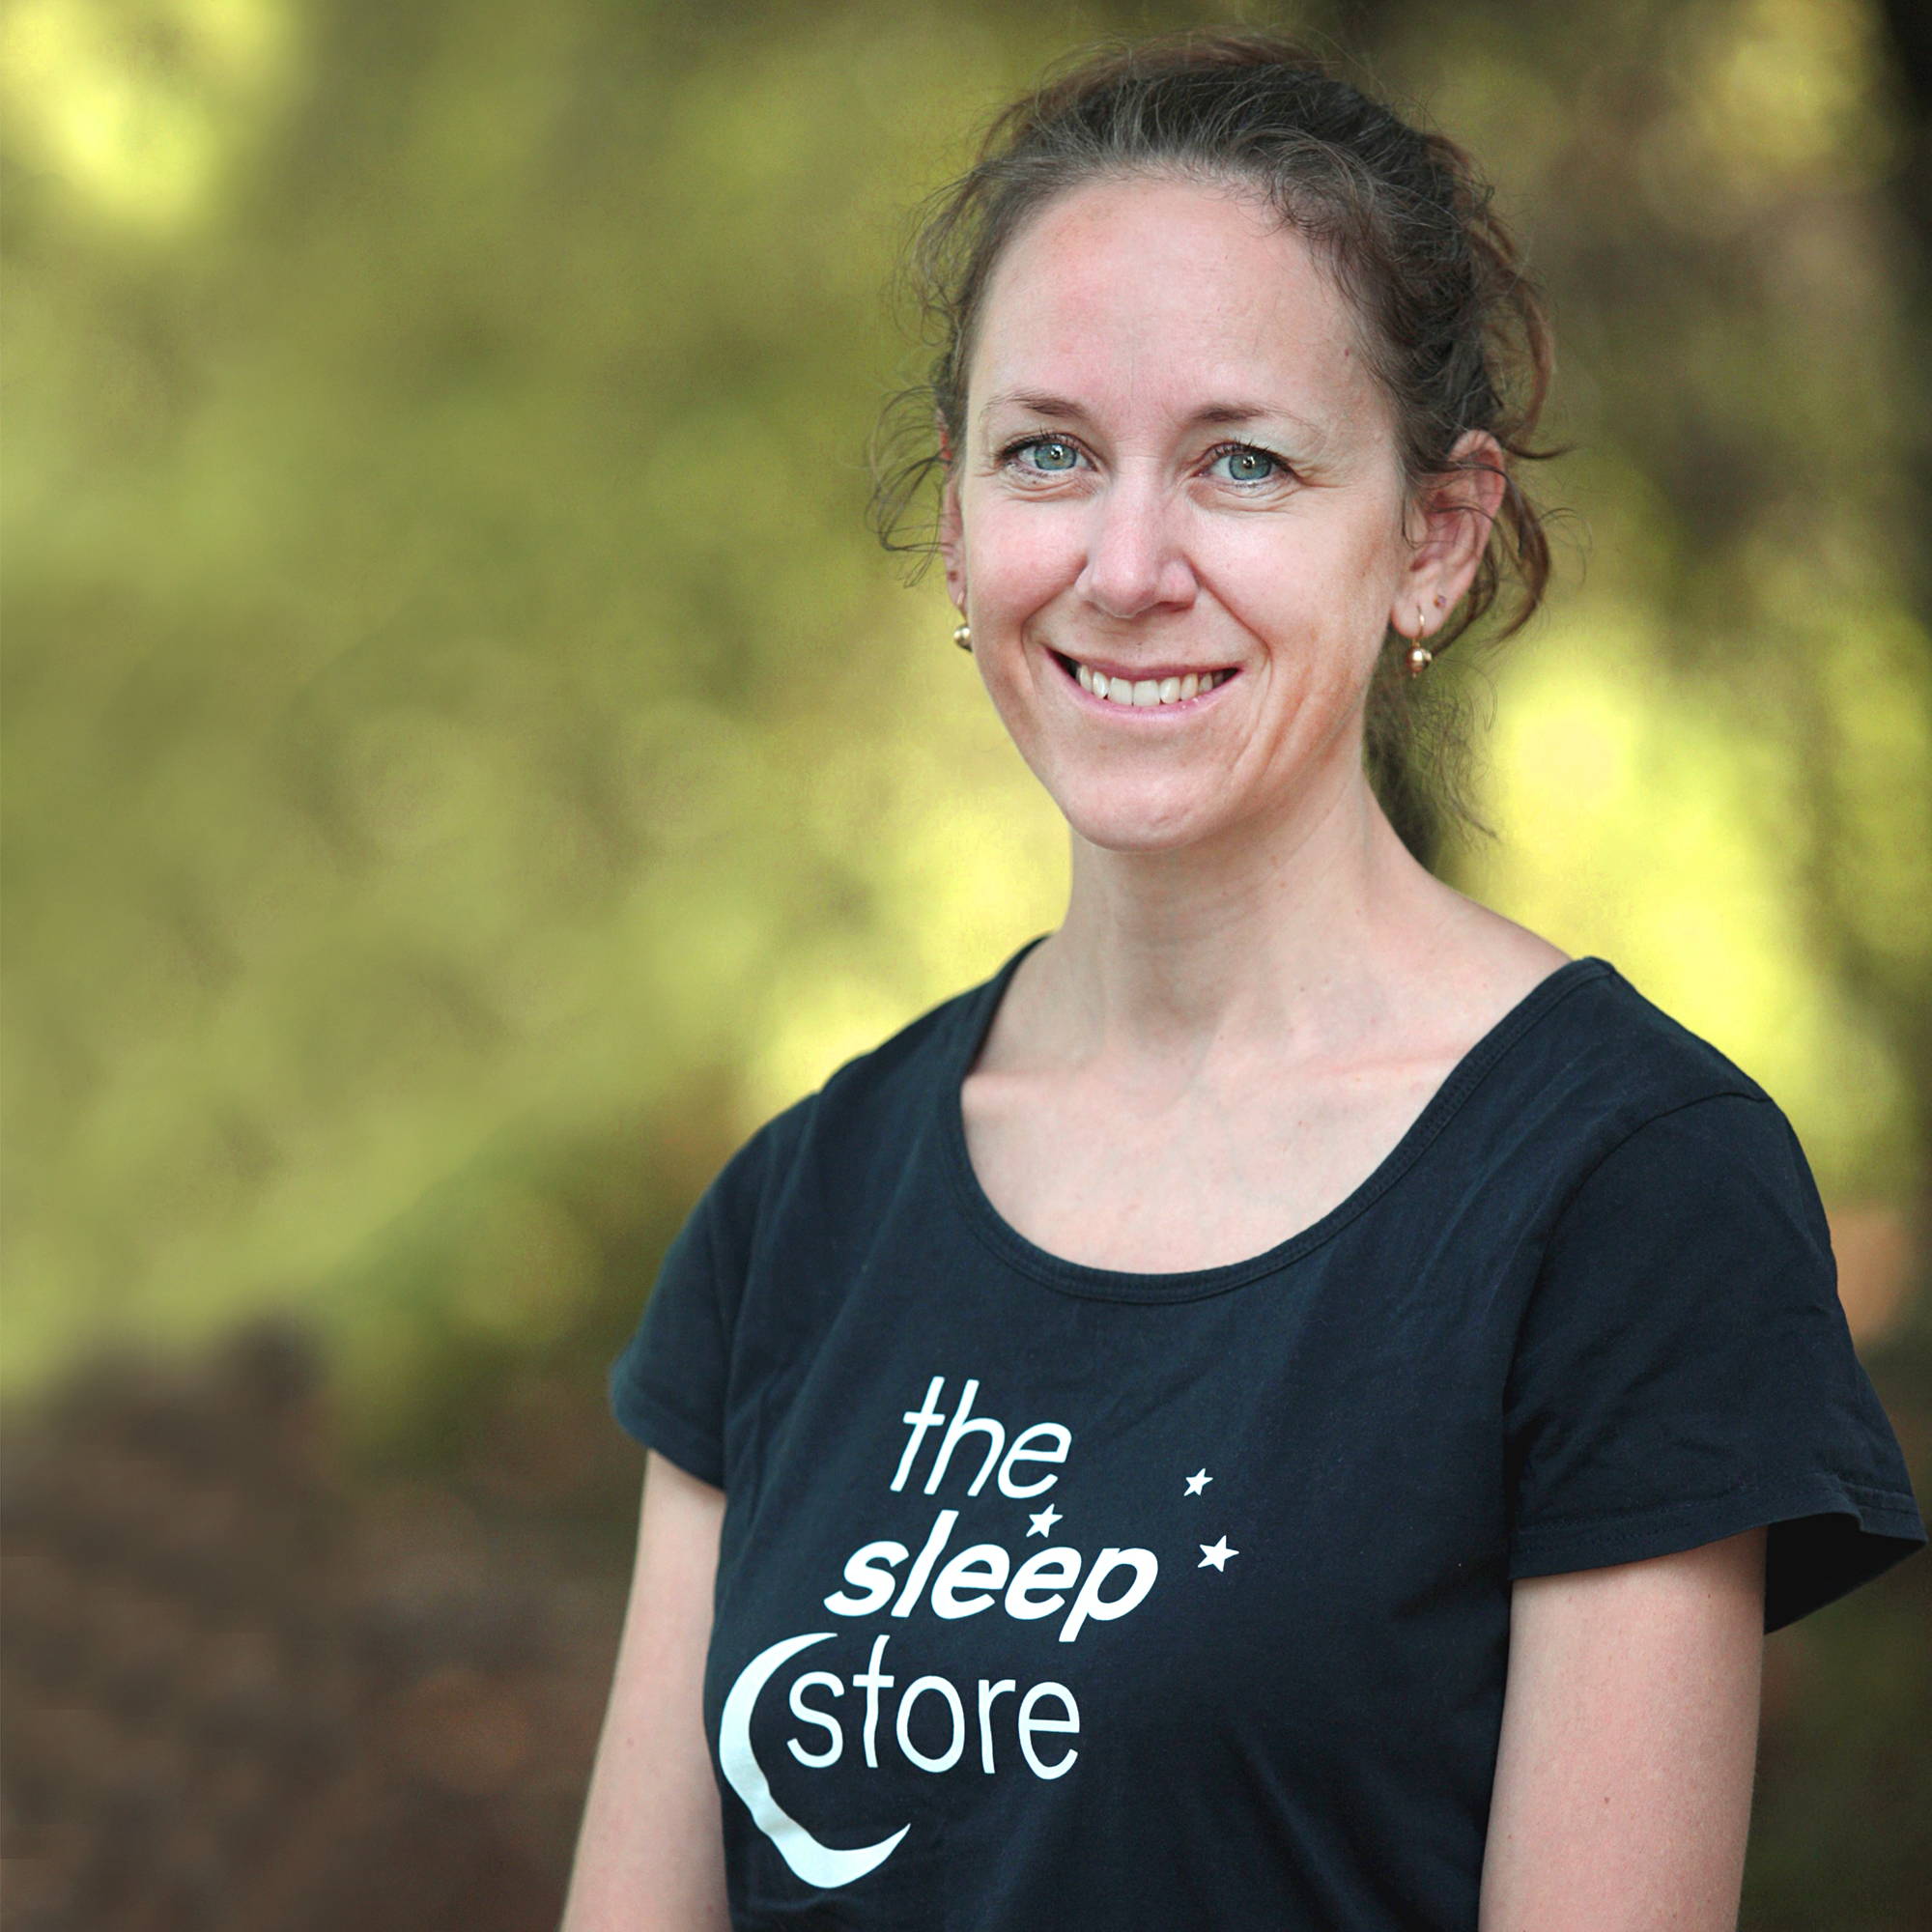 the sleep store customer service woman in sleep store t-shirt smiling